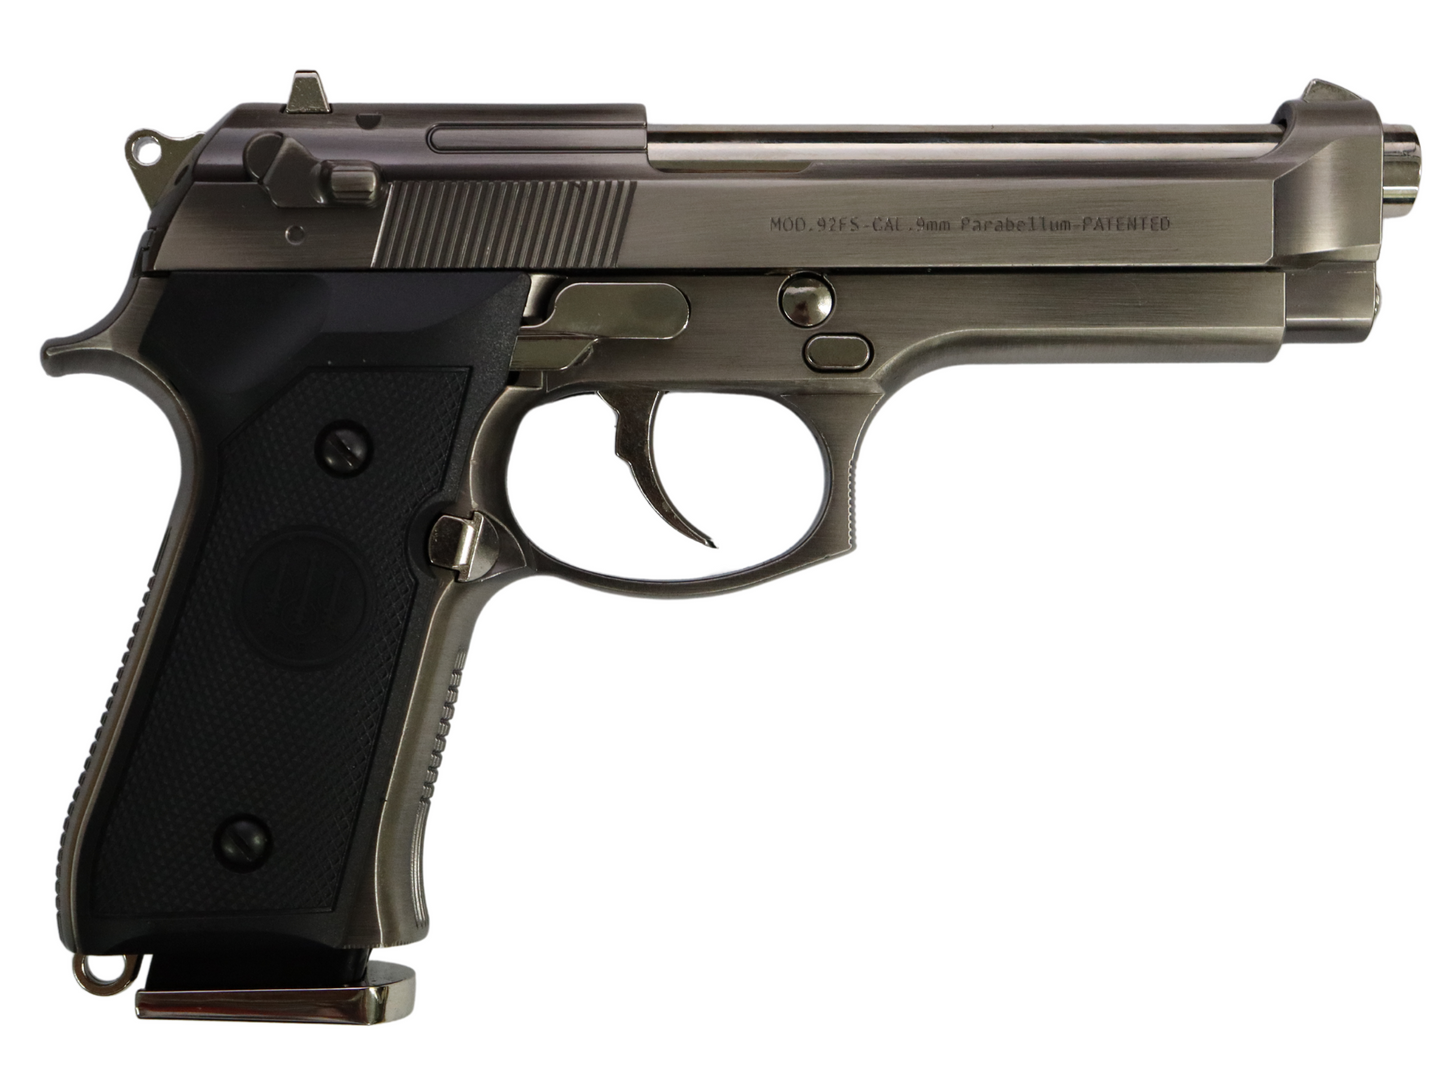 
                  
                    AQK Beretta 92 Manual Gel Blaster Pistol- Silver Manba
                  
                